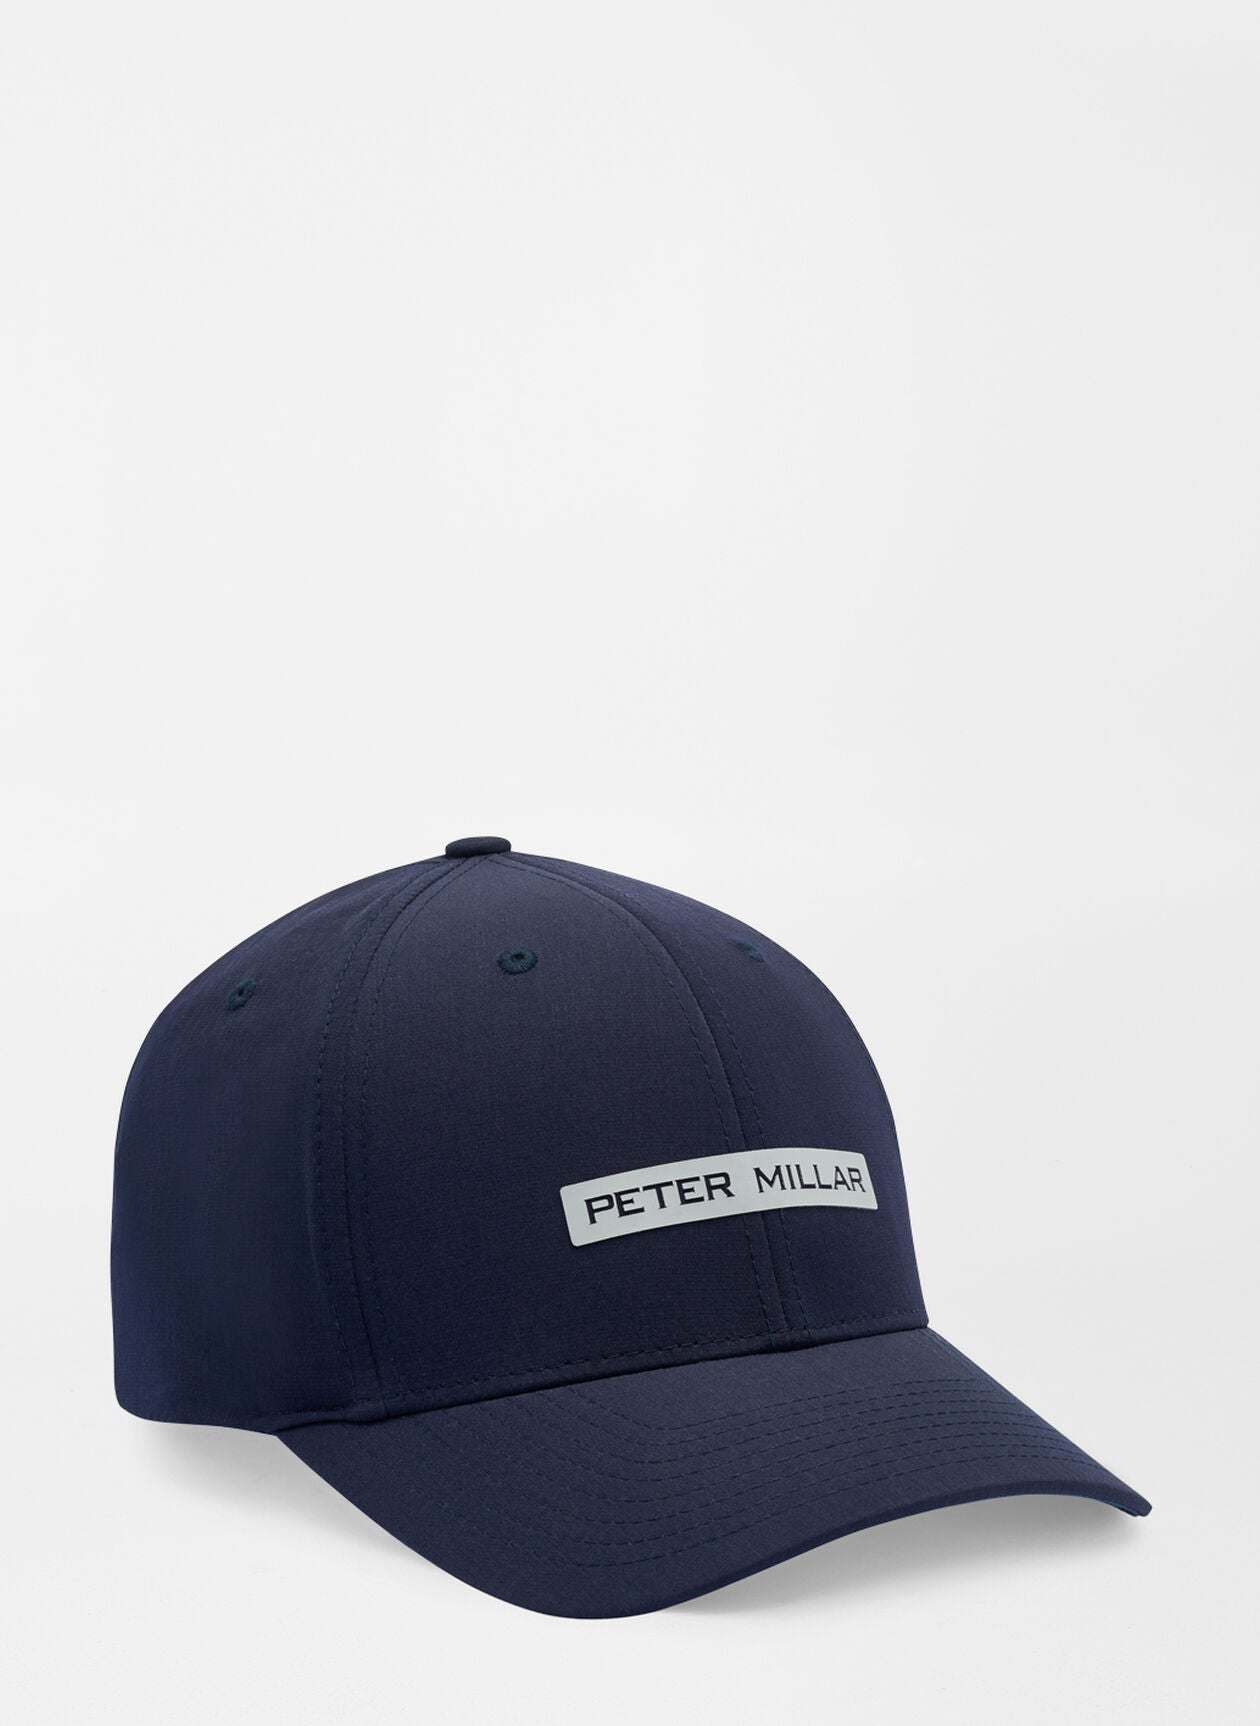 Peter Millar Perfromance Hat Navy